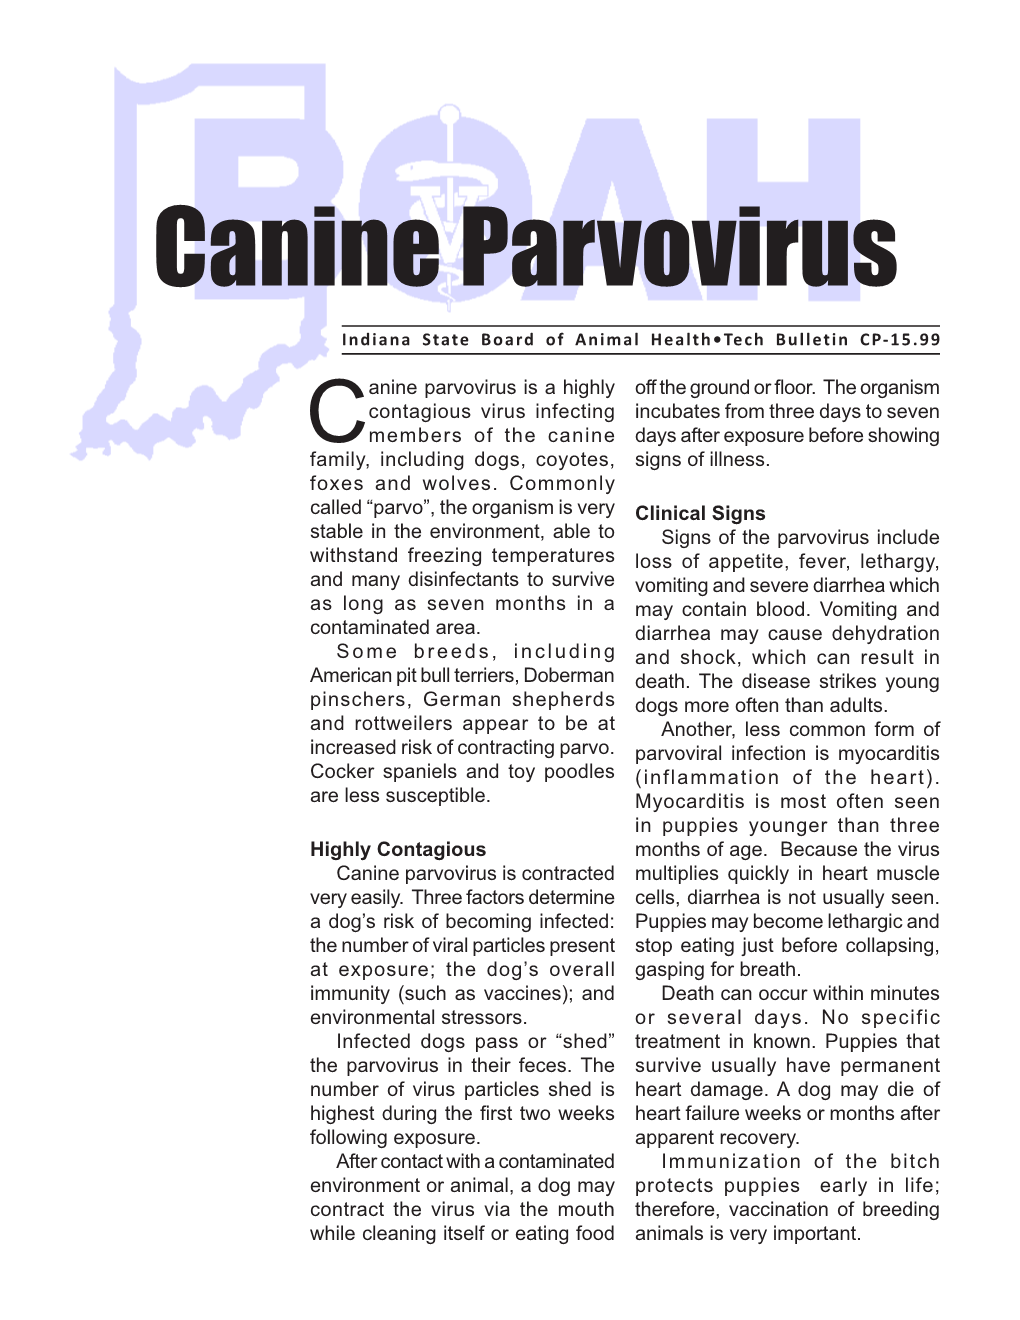 Canine Parvovirus Is a Highly